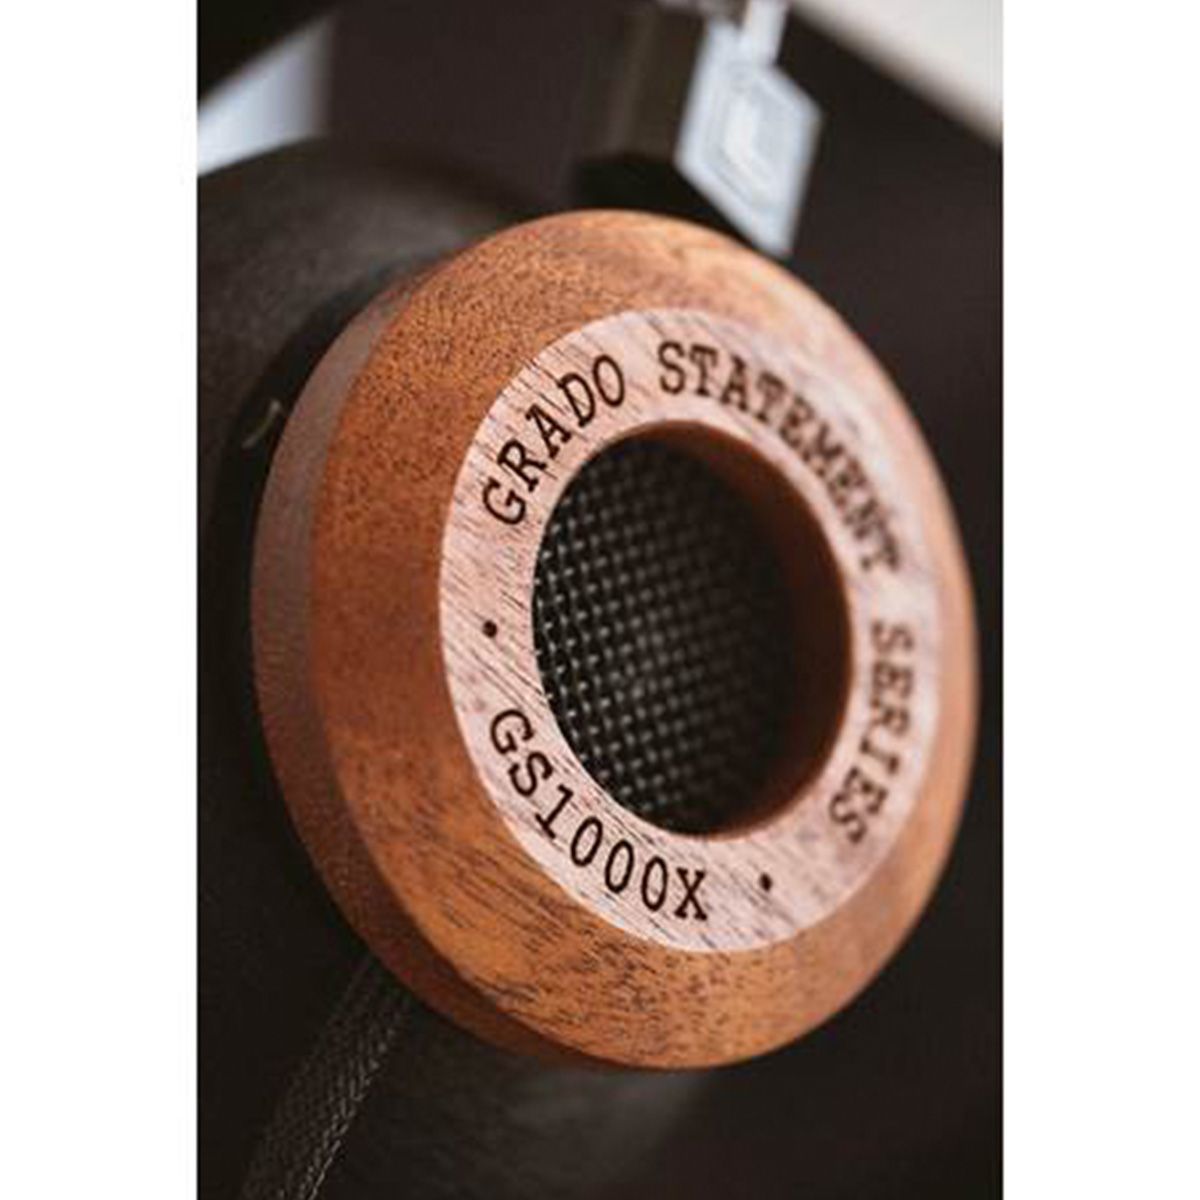 Grado GS1000x Statement Series Over-Ear Headphones